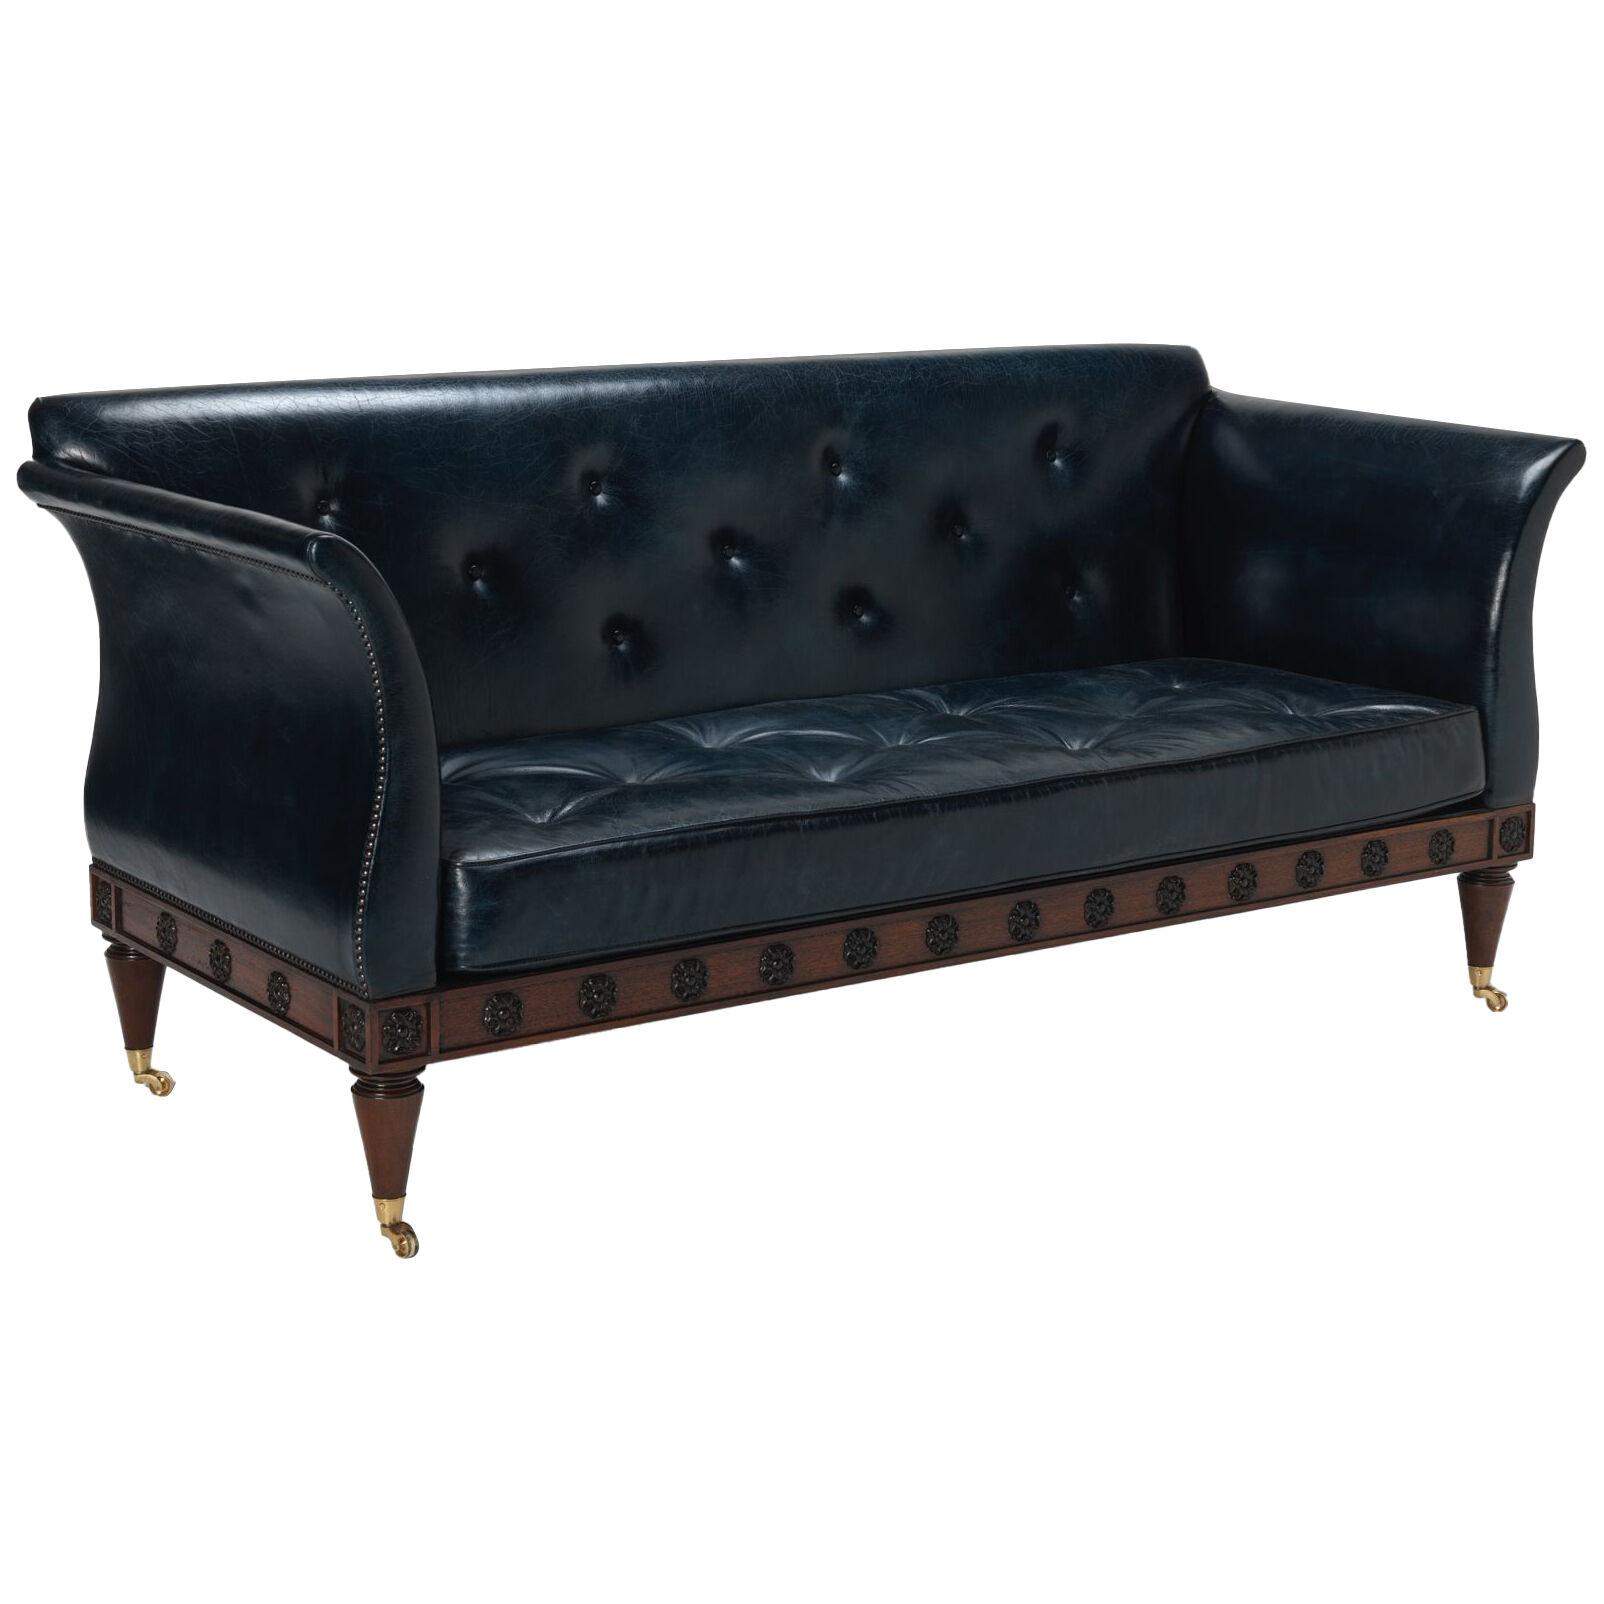 The Dinton Sofa